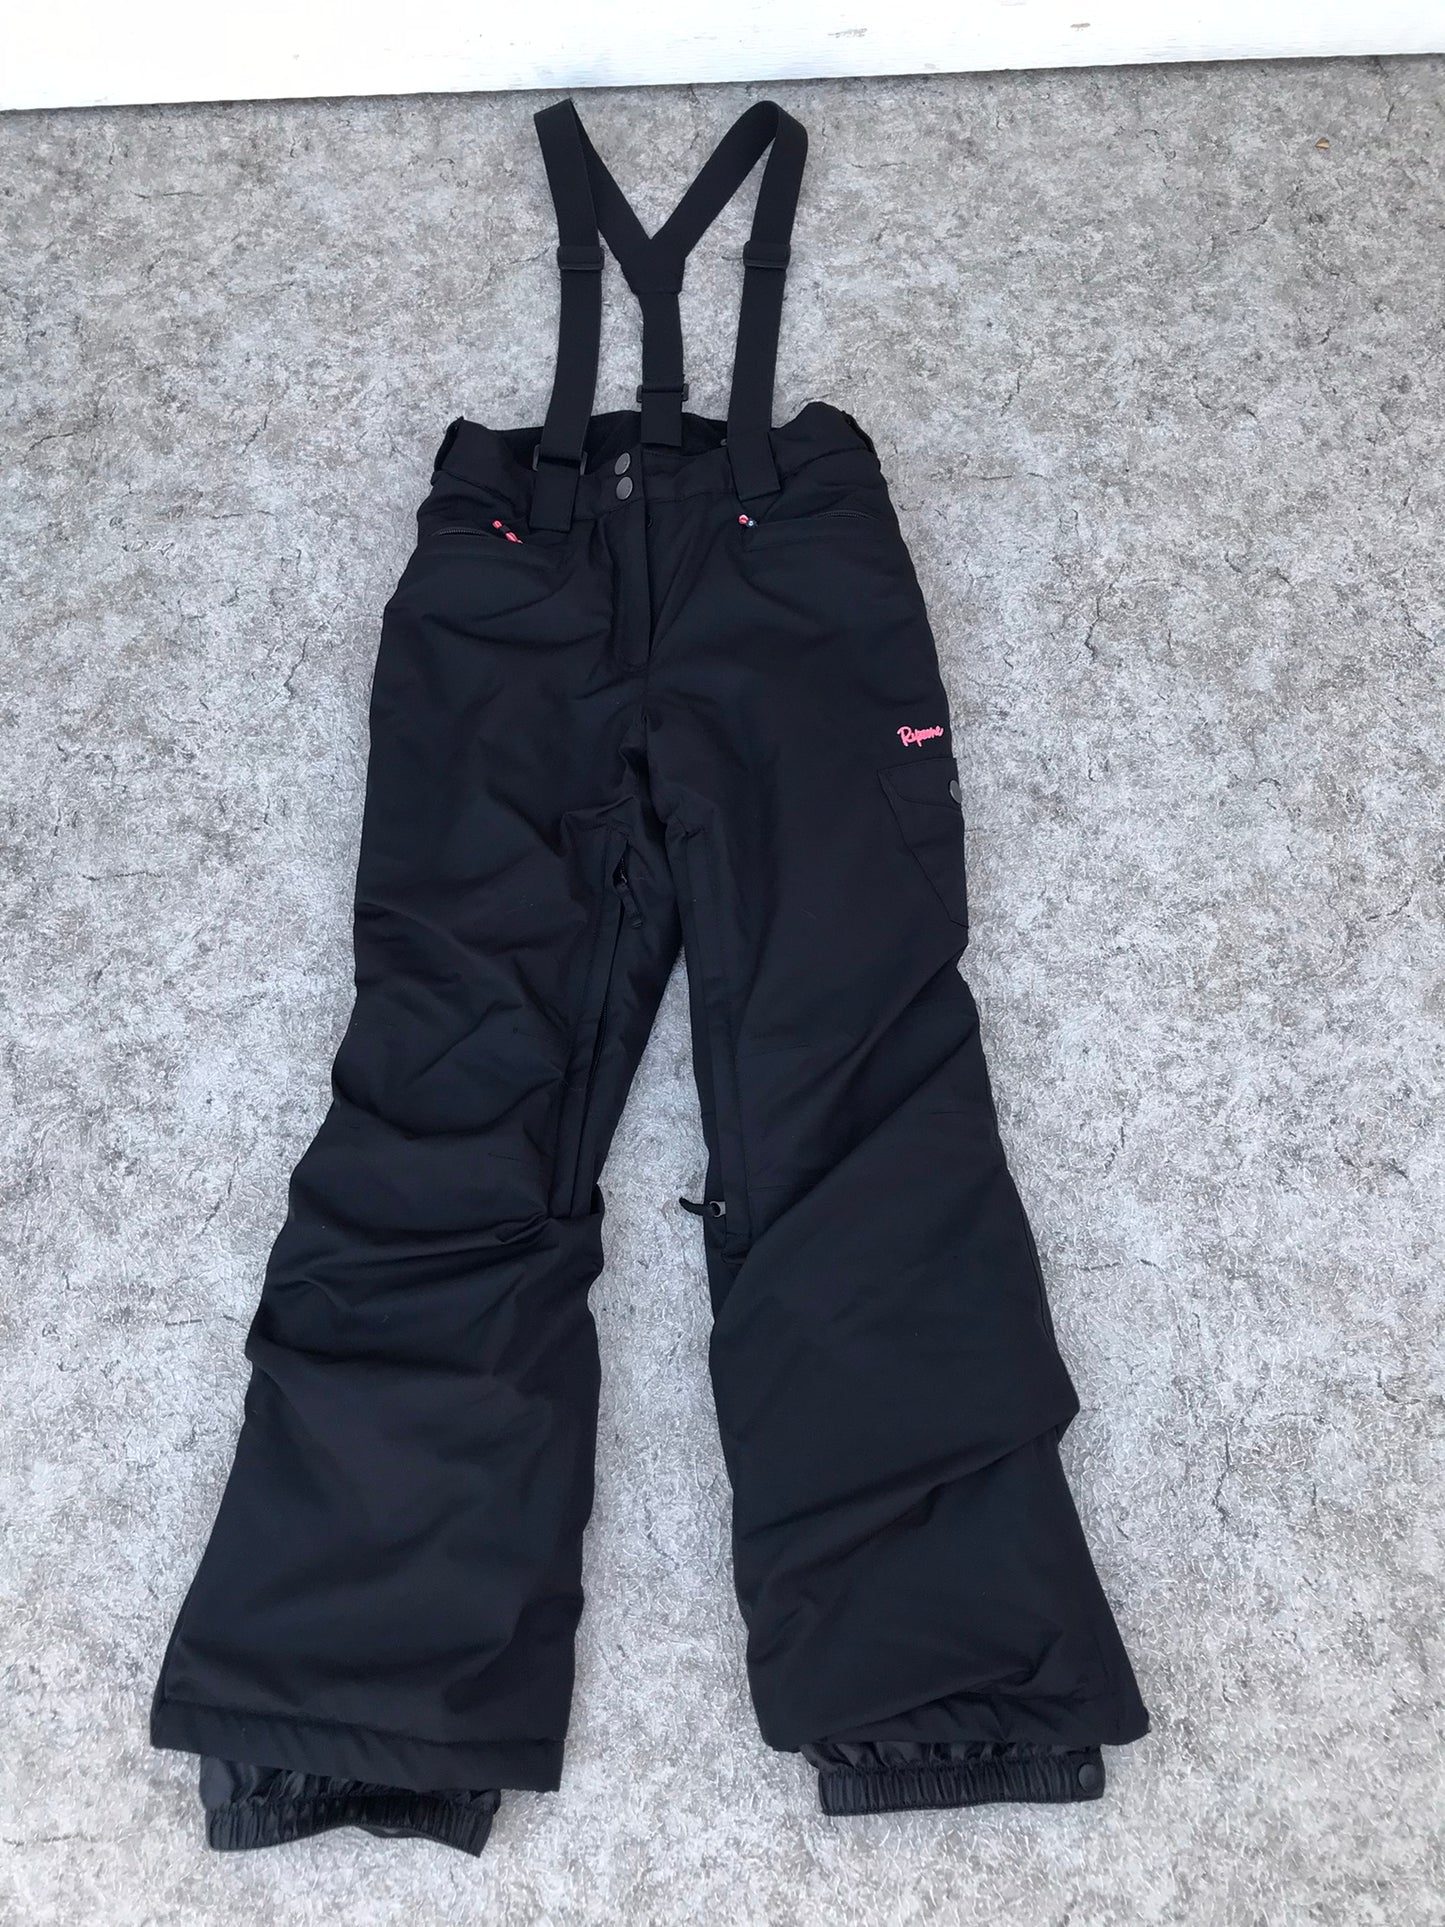 Snow Pants Child Size 8-10 Ripzone Waterproof With Bib Black Pink Like New